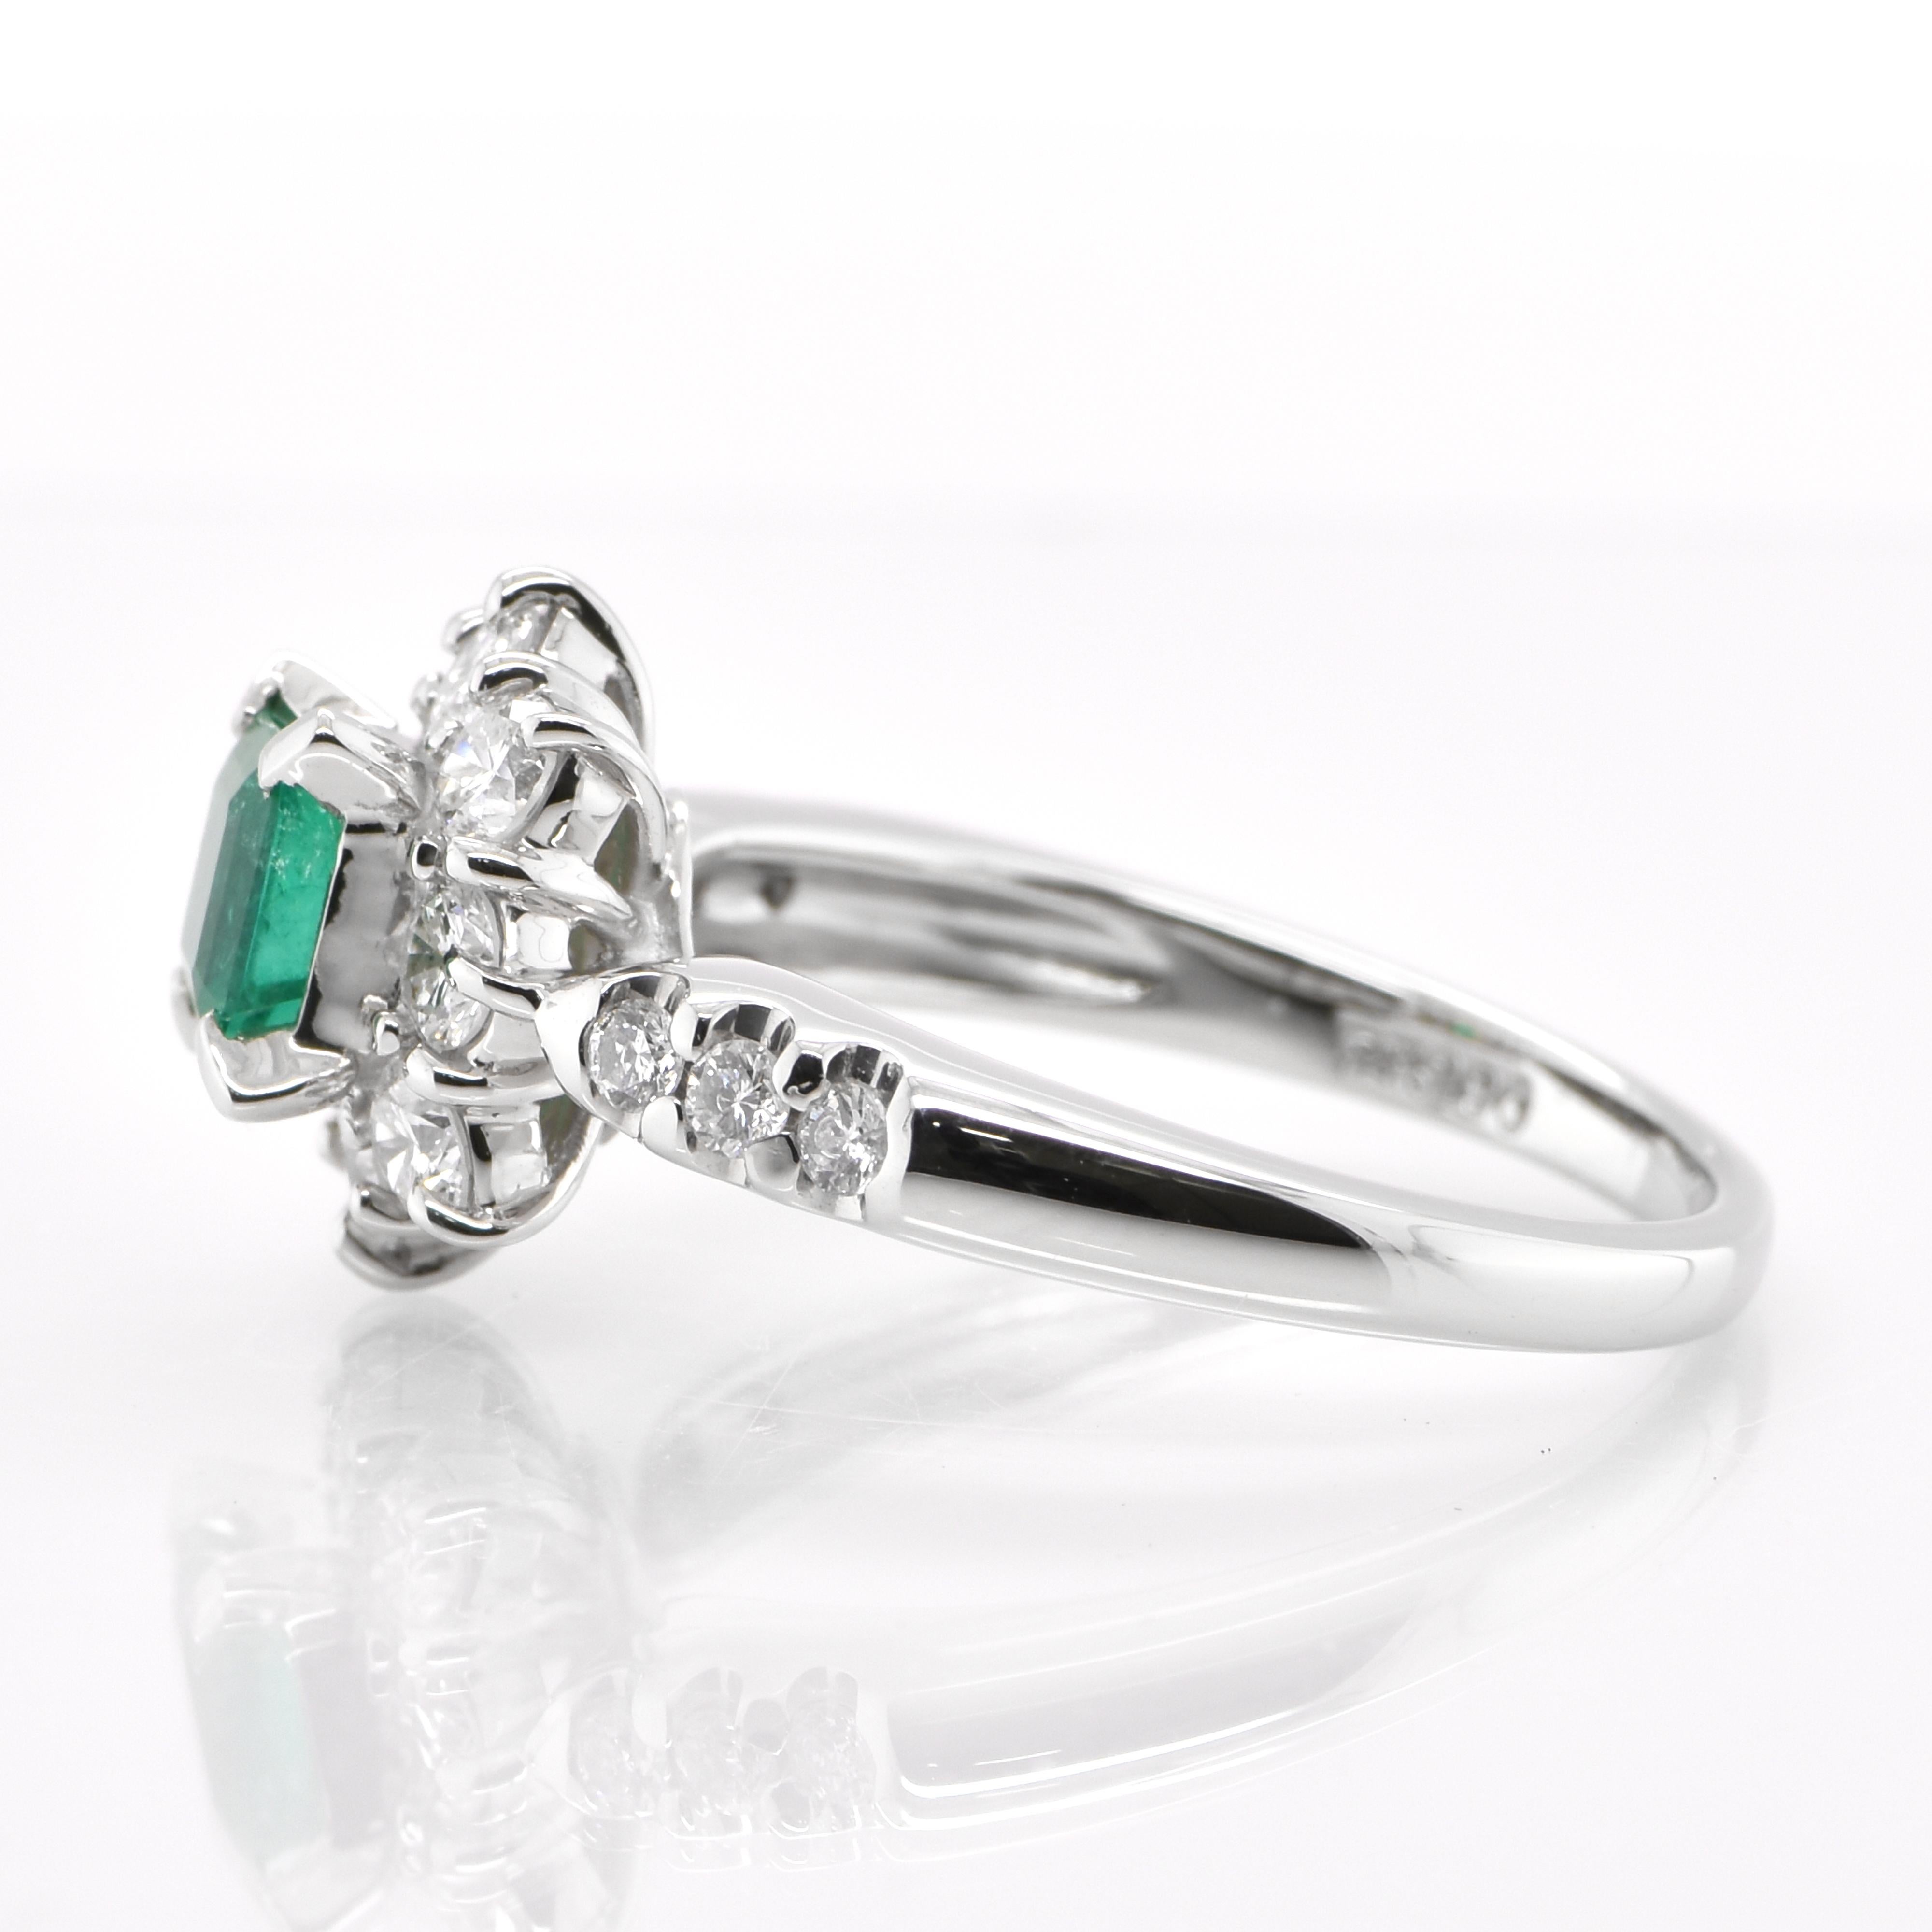 Emerald Cut 0.48 Carat Natural Emerald and Diamond Halo Ring Set in Platinum